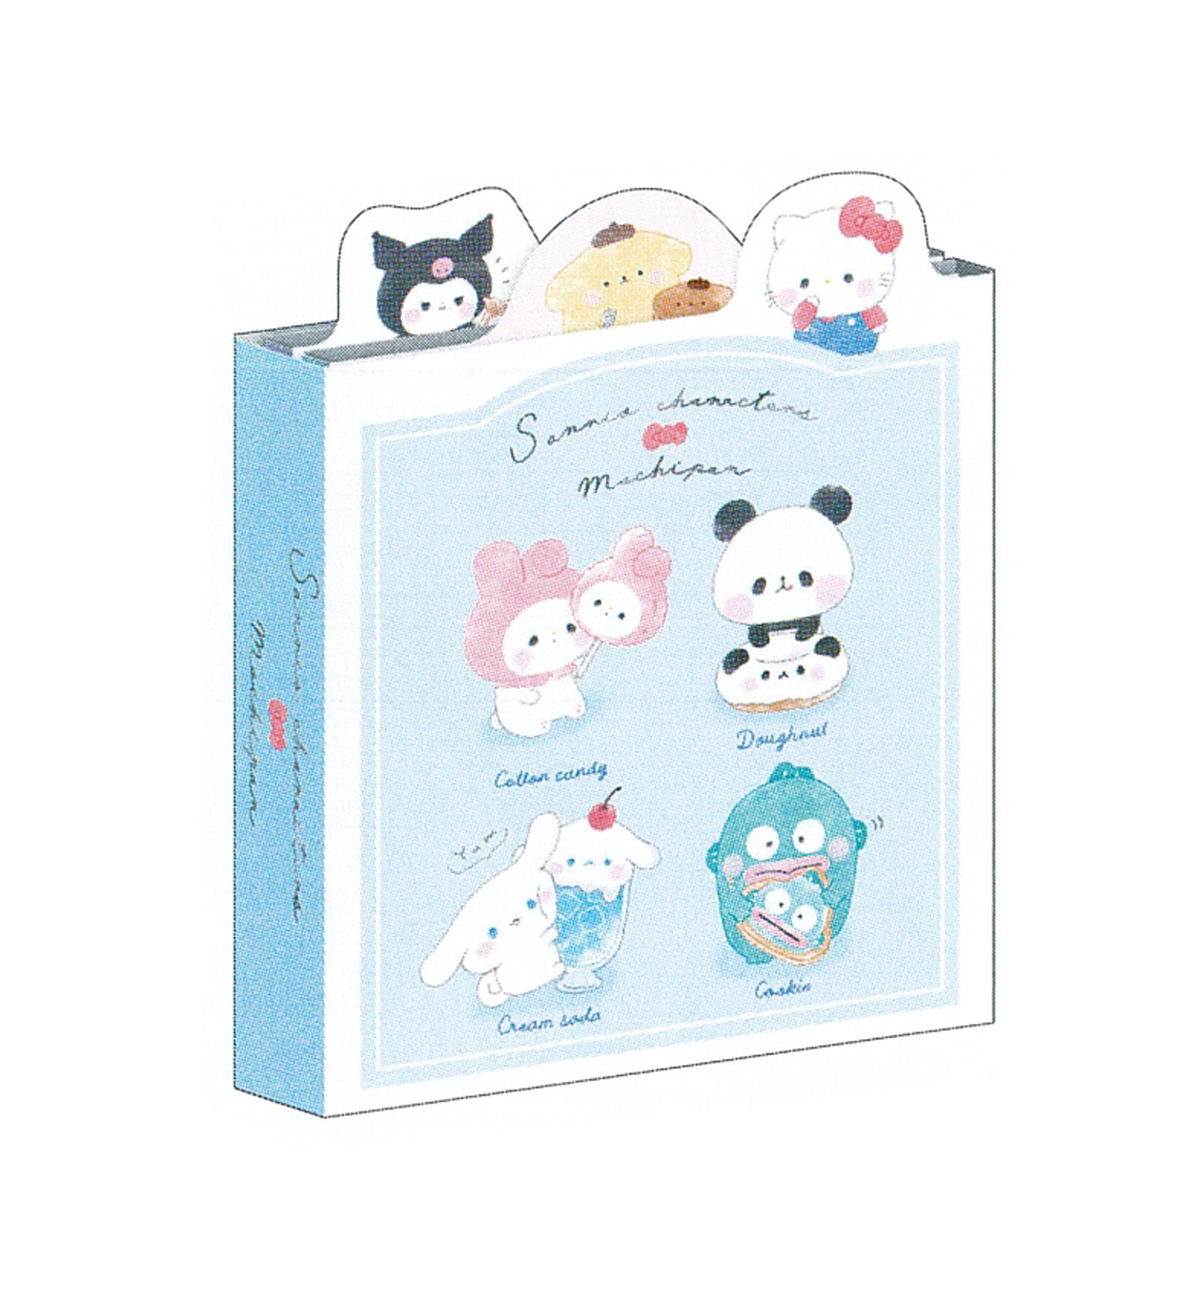 Sanrio x Mochimochi Booklet Memopad [Panda/Cafe]